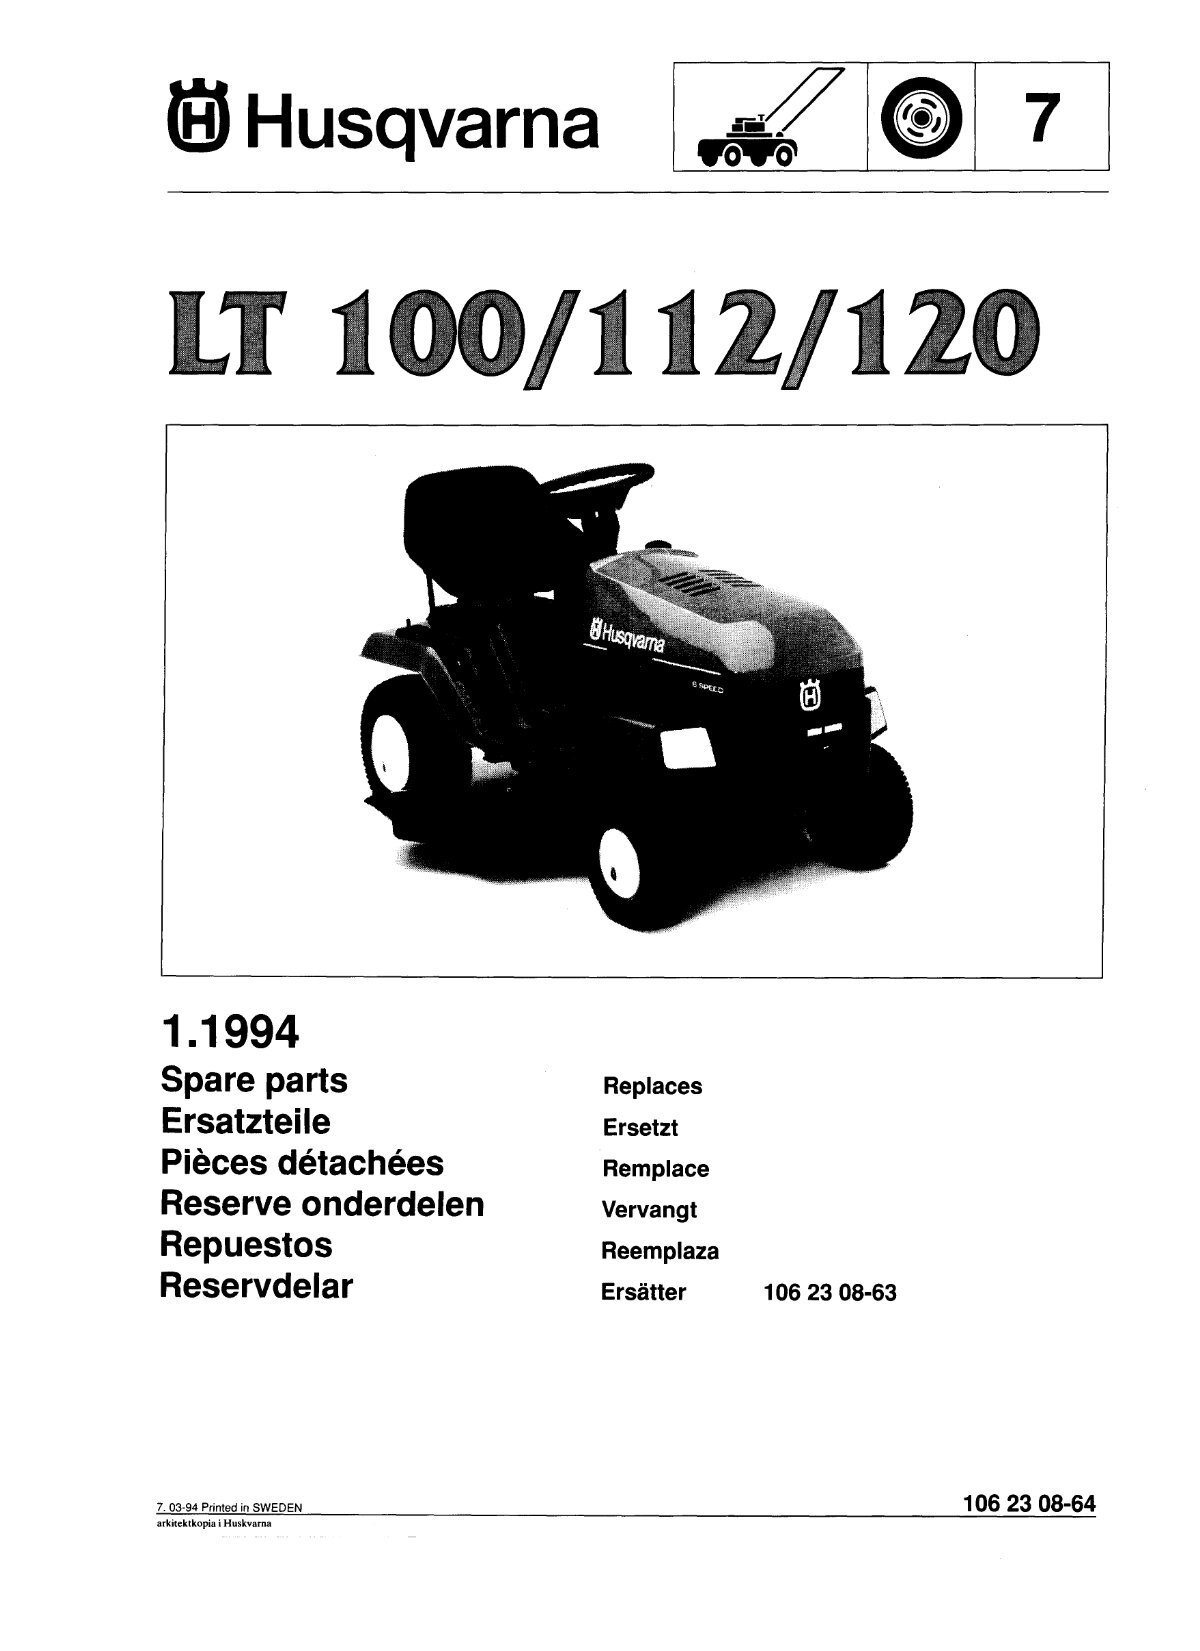 IPL, LT100, LT112, LT120, 1994-03, Tractor - Husqvarna